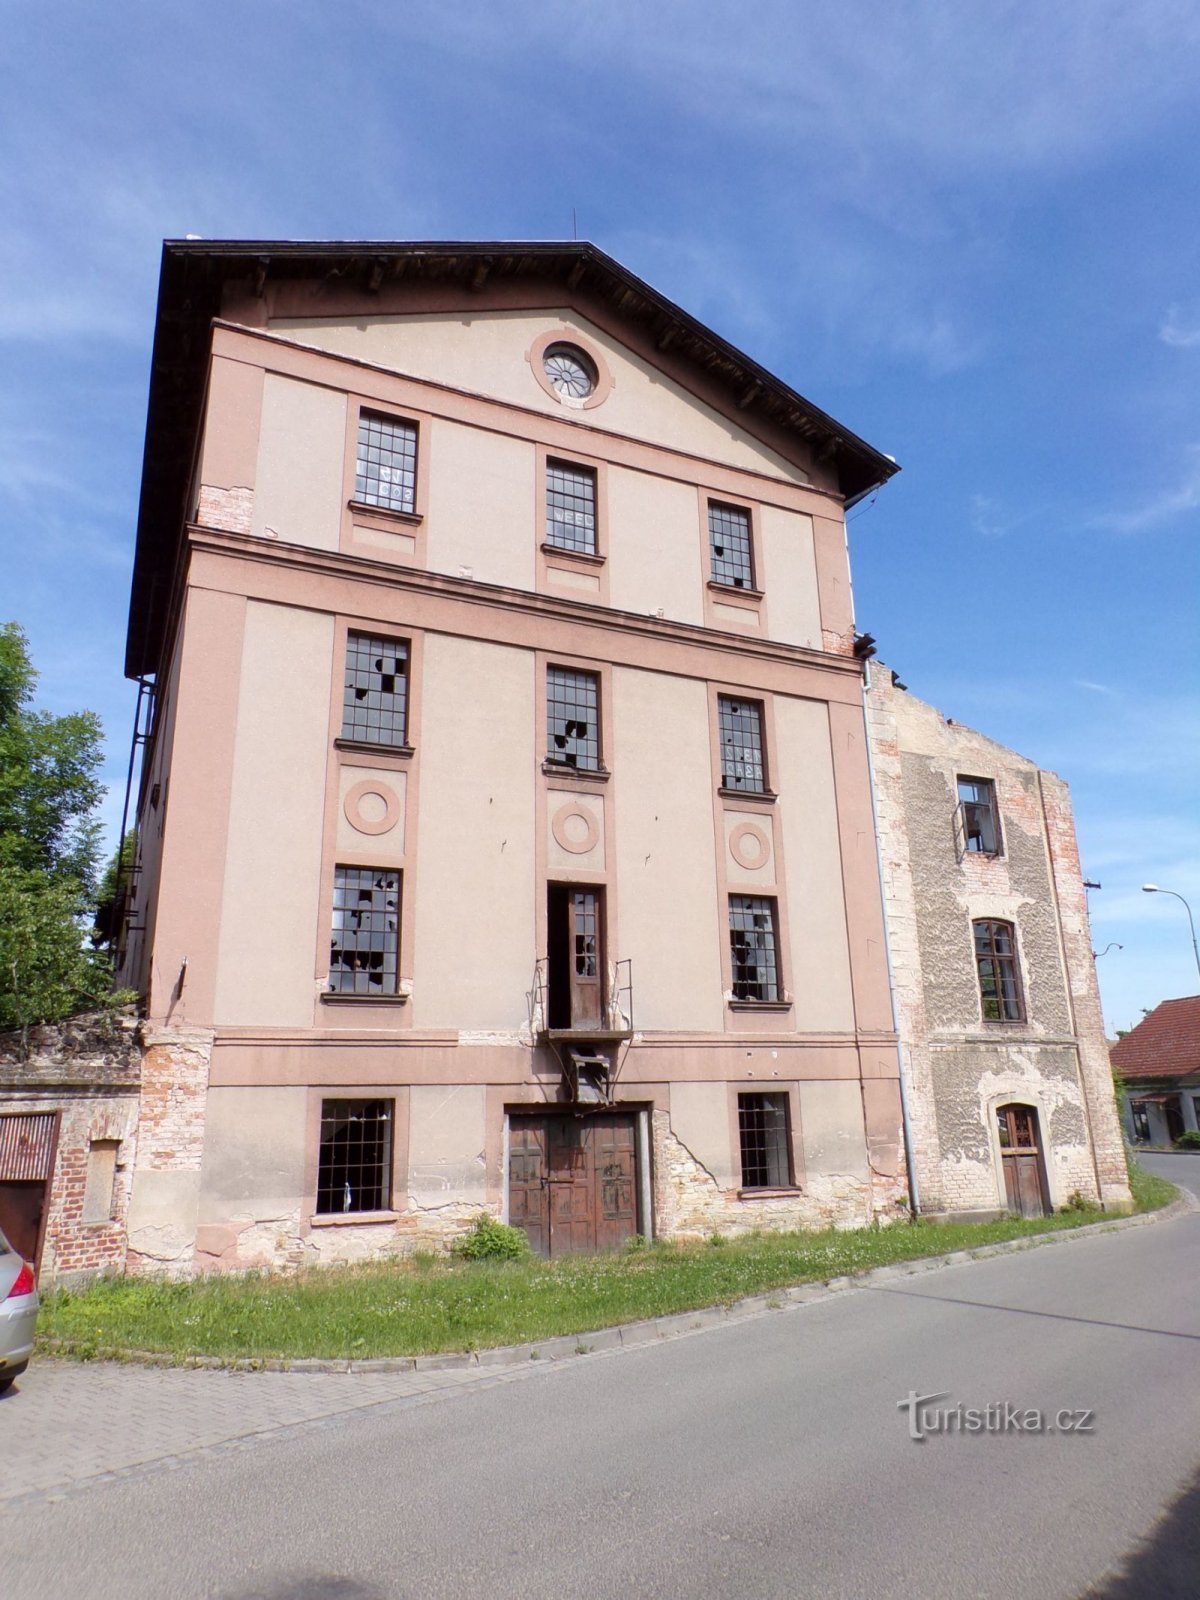 Hajnišův, anteriormente Dotřelův mill (Třebechovice pod Orebem, 15.6.2021/XNUMX/XNUMX)